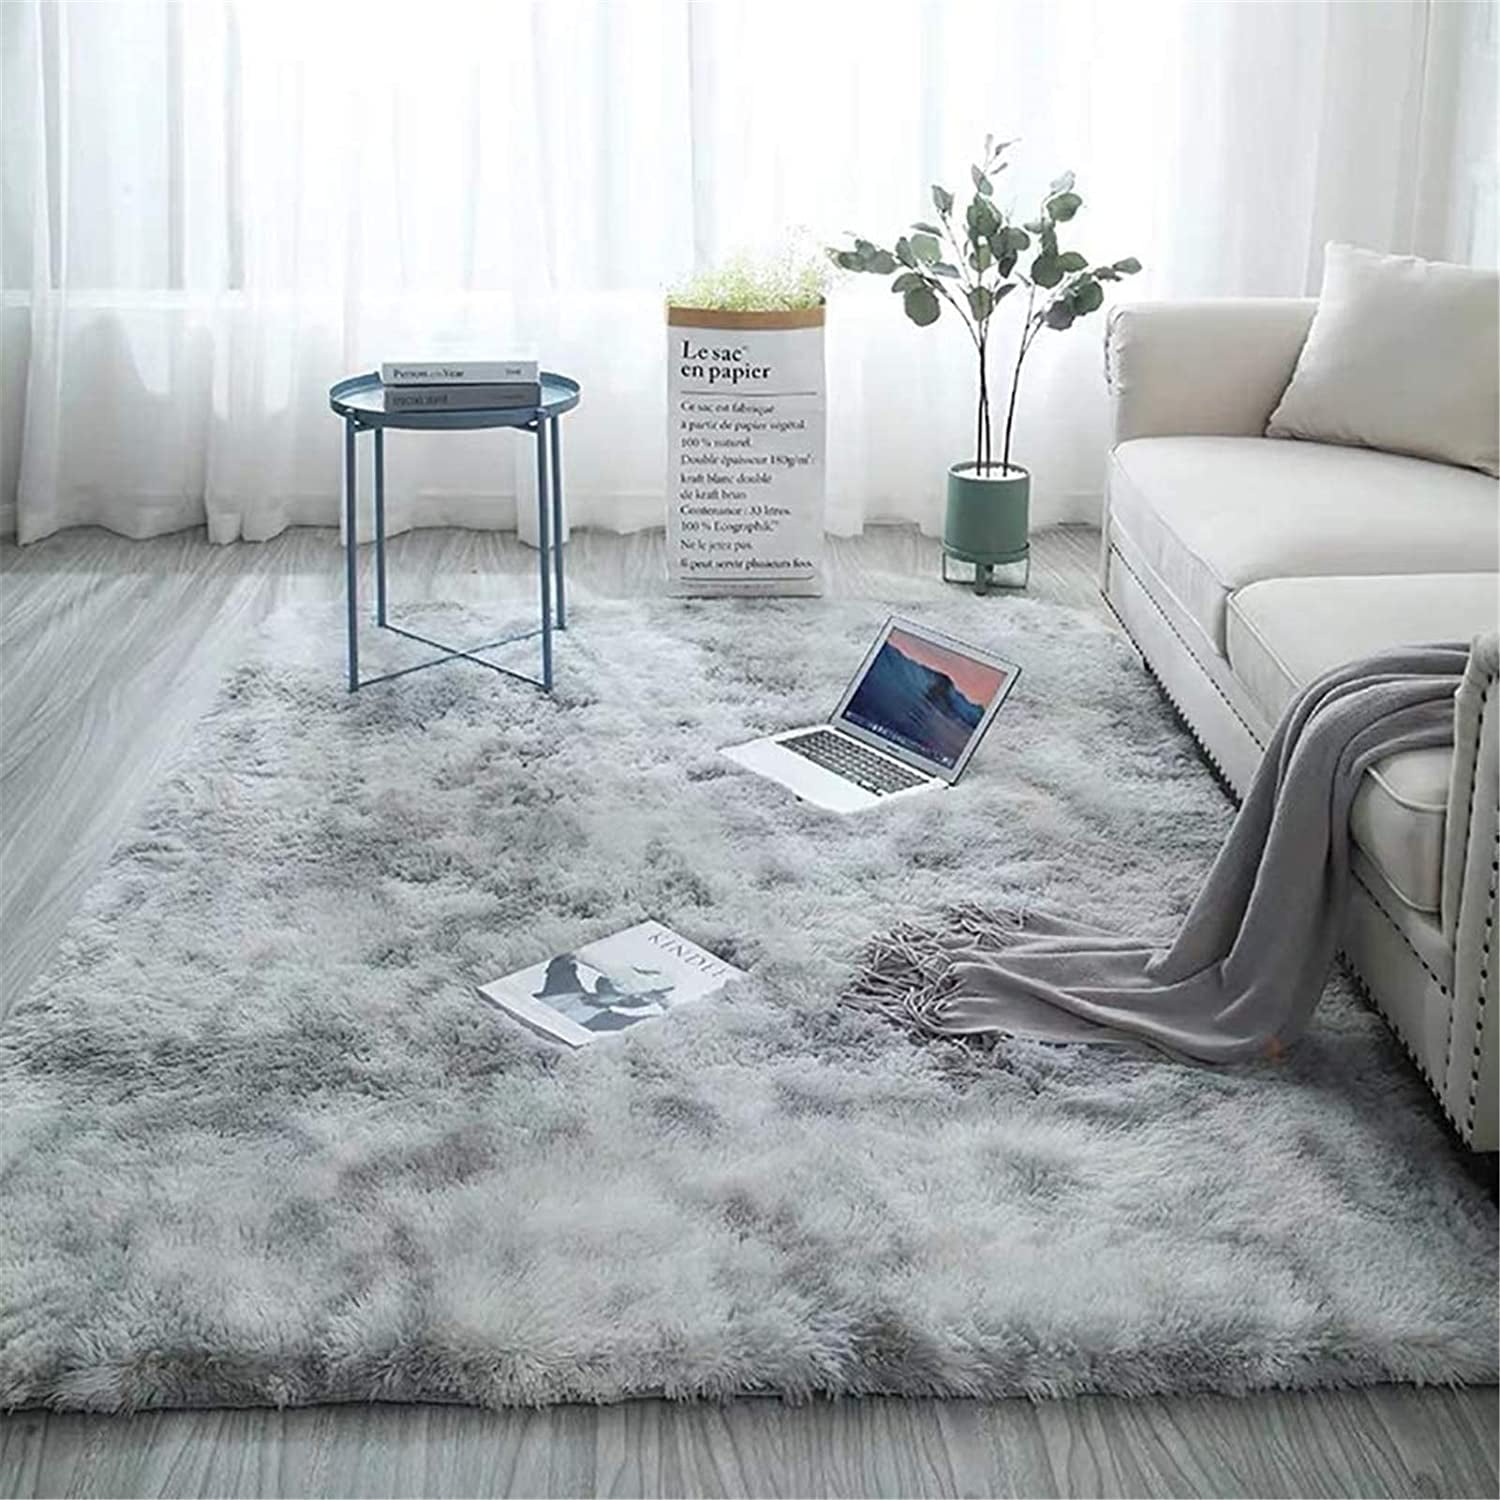 Buffalo Bills Large Area Rugs Anti-skid Living room Bedroom Warm Floor Mat Gifts 